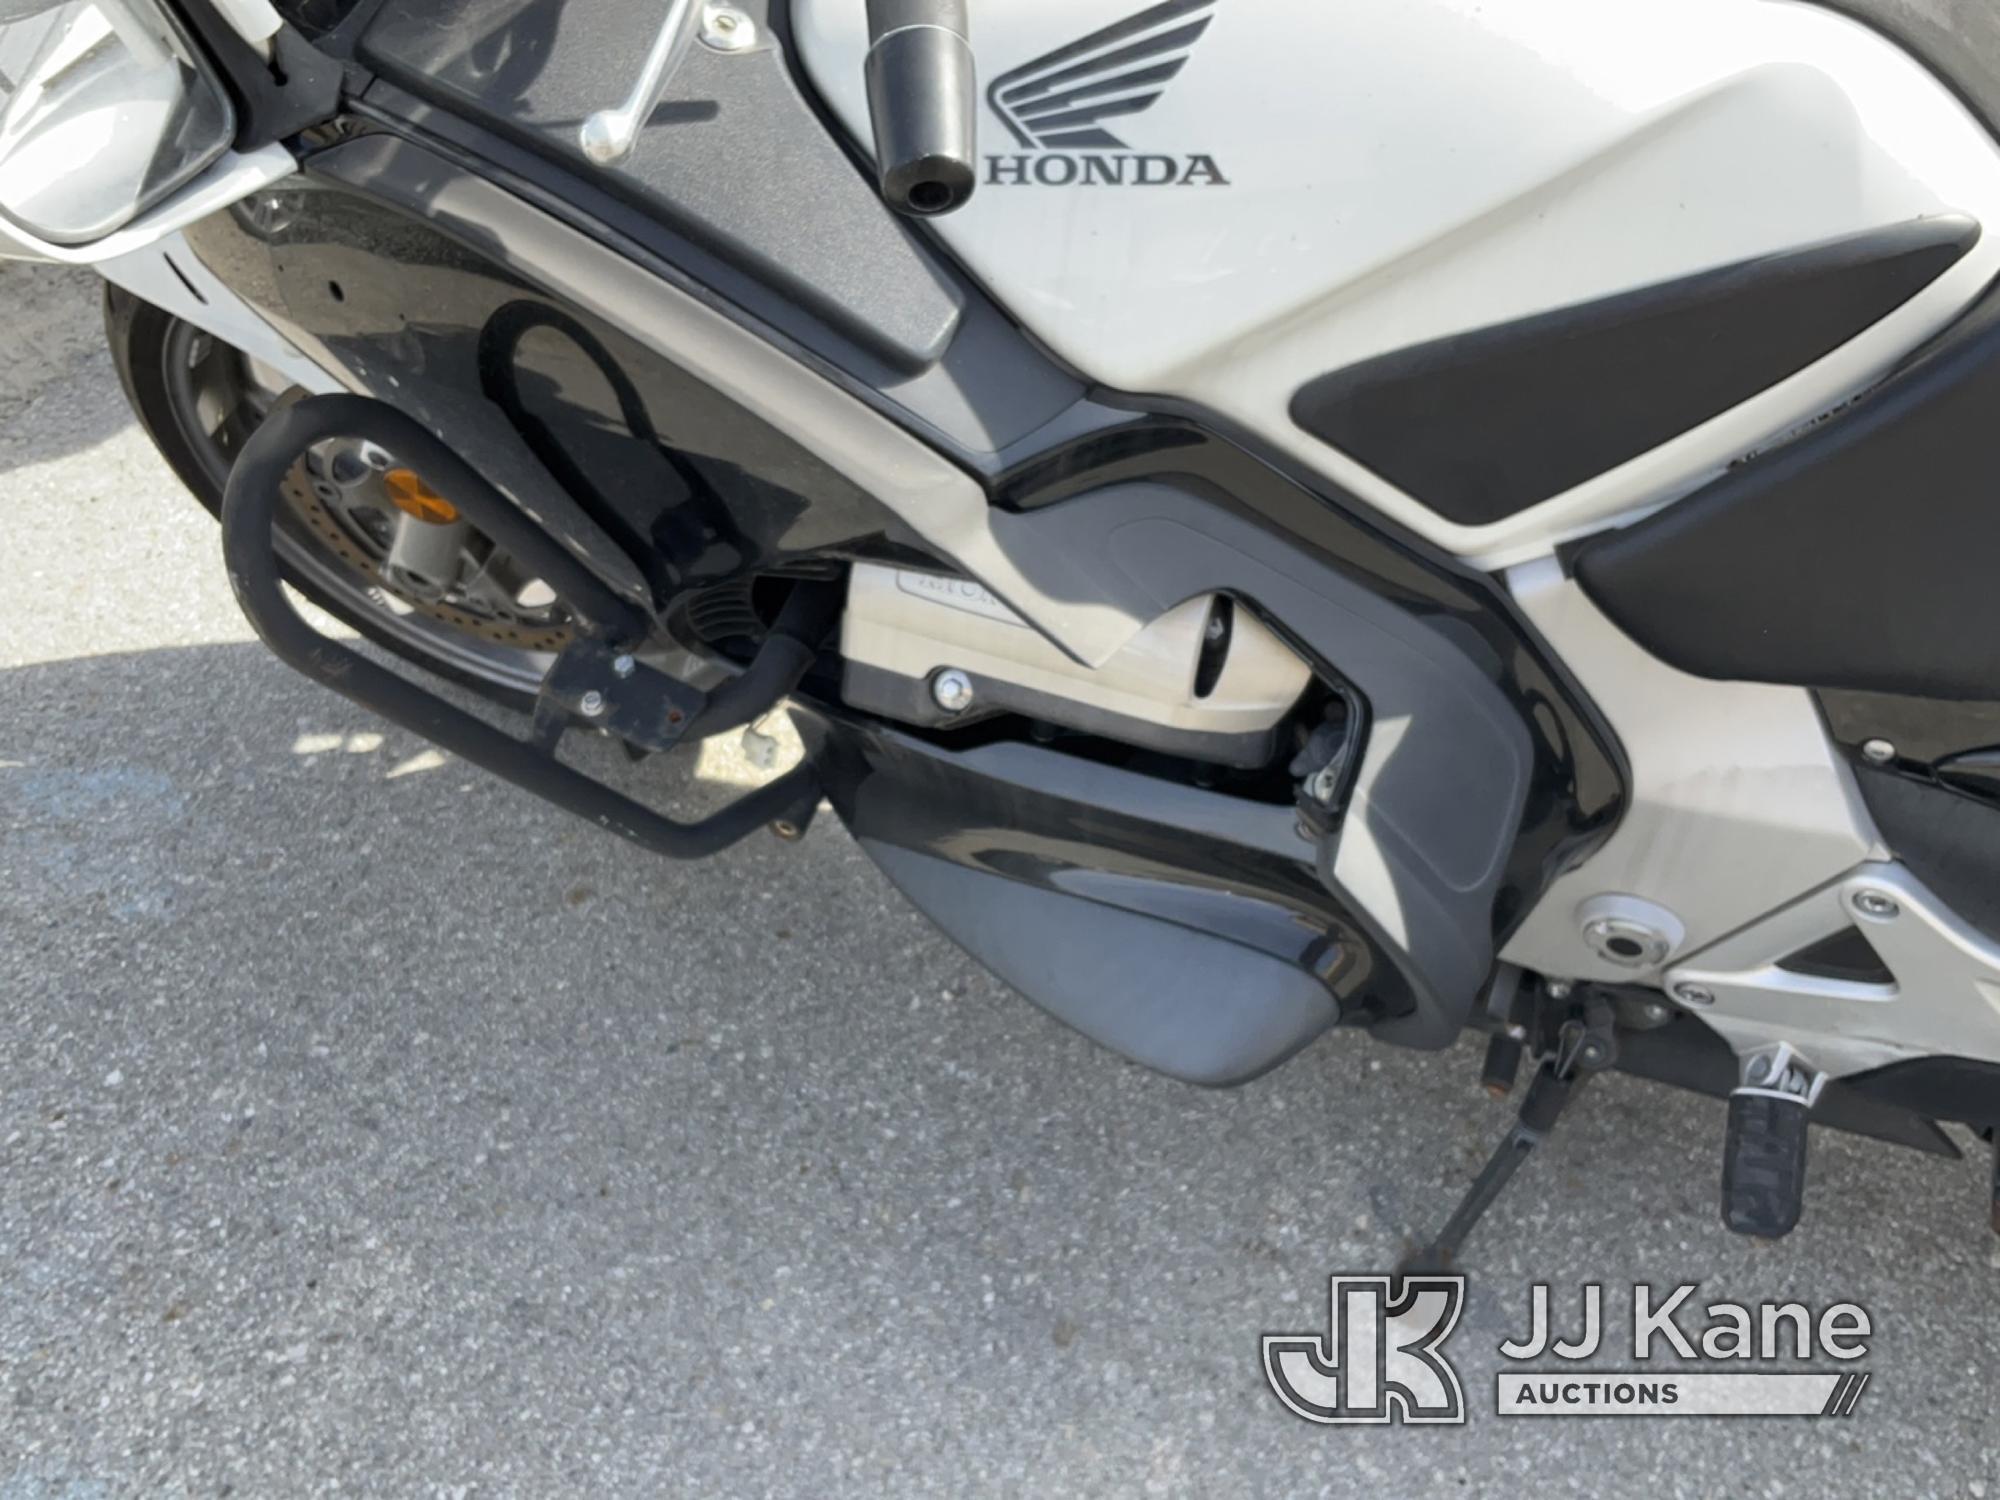 (Jurupa Valley, CA) 2015 Honda ST1300PA Motorcycle Runs & Moves, ABS Light Is On